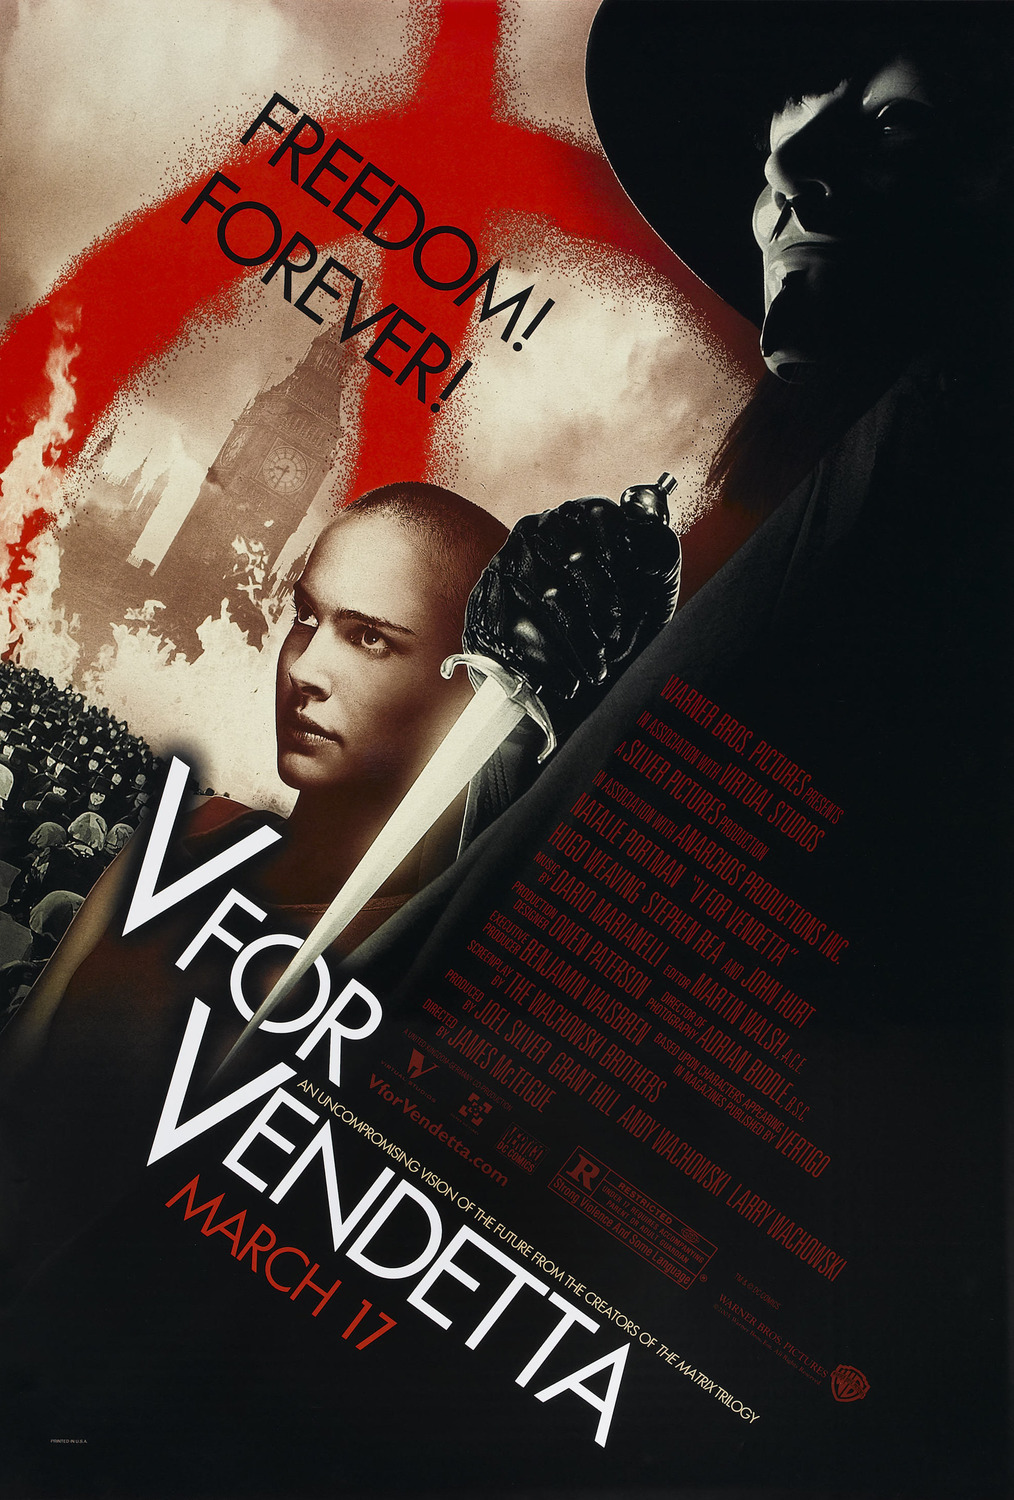 Extra Large Movie Poster Image for V for Vendetta (#2 of 6)